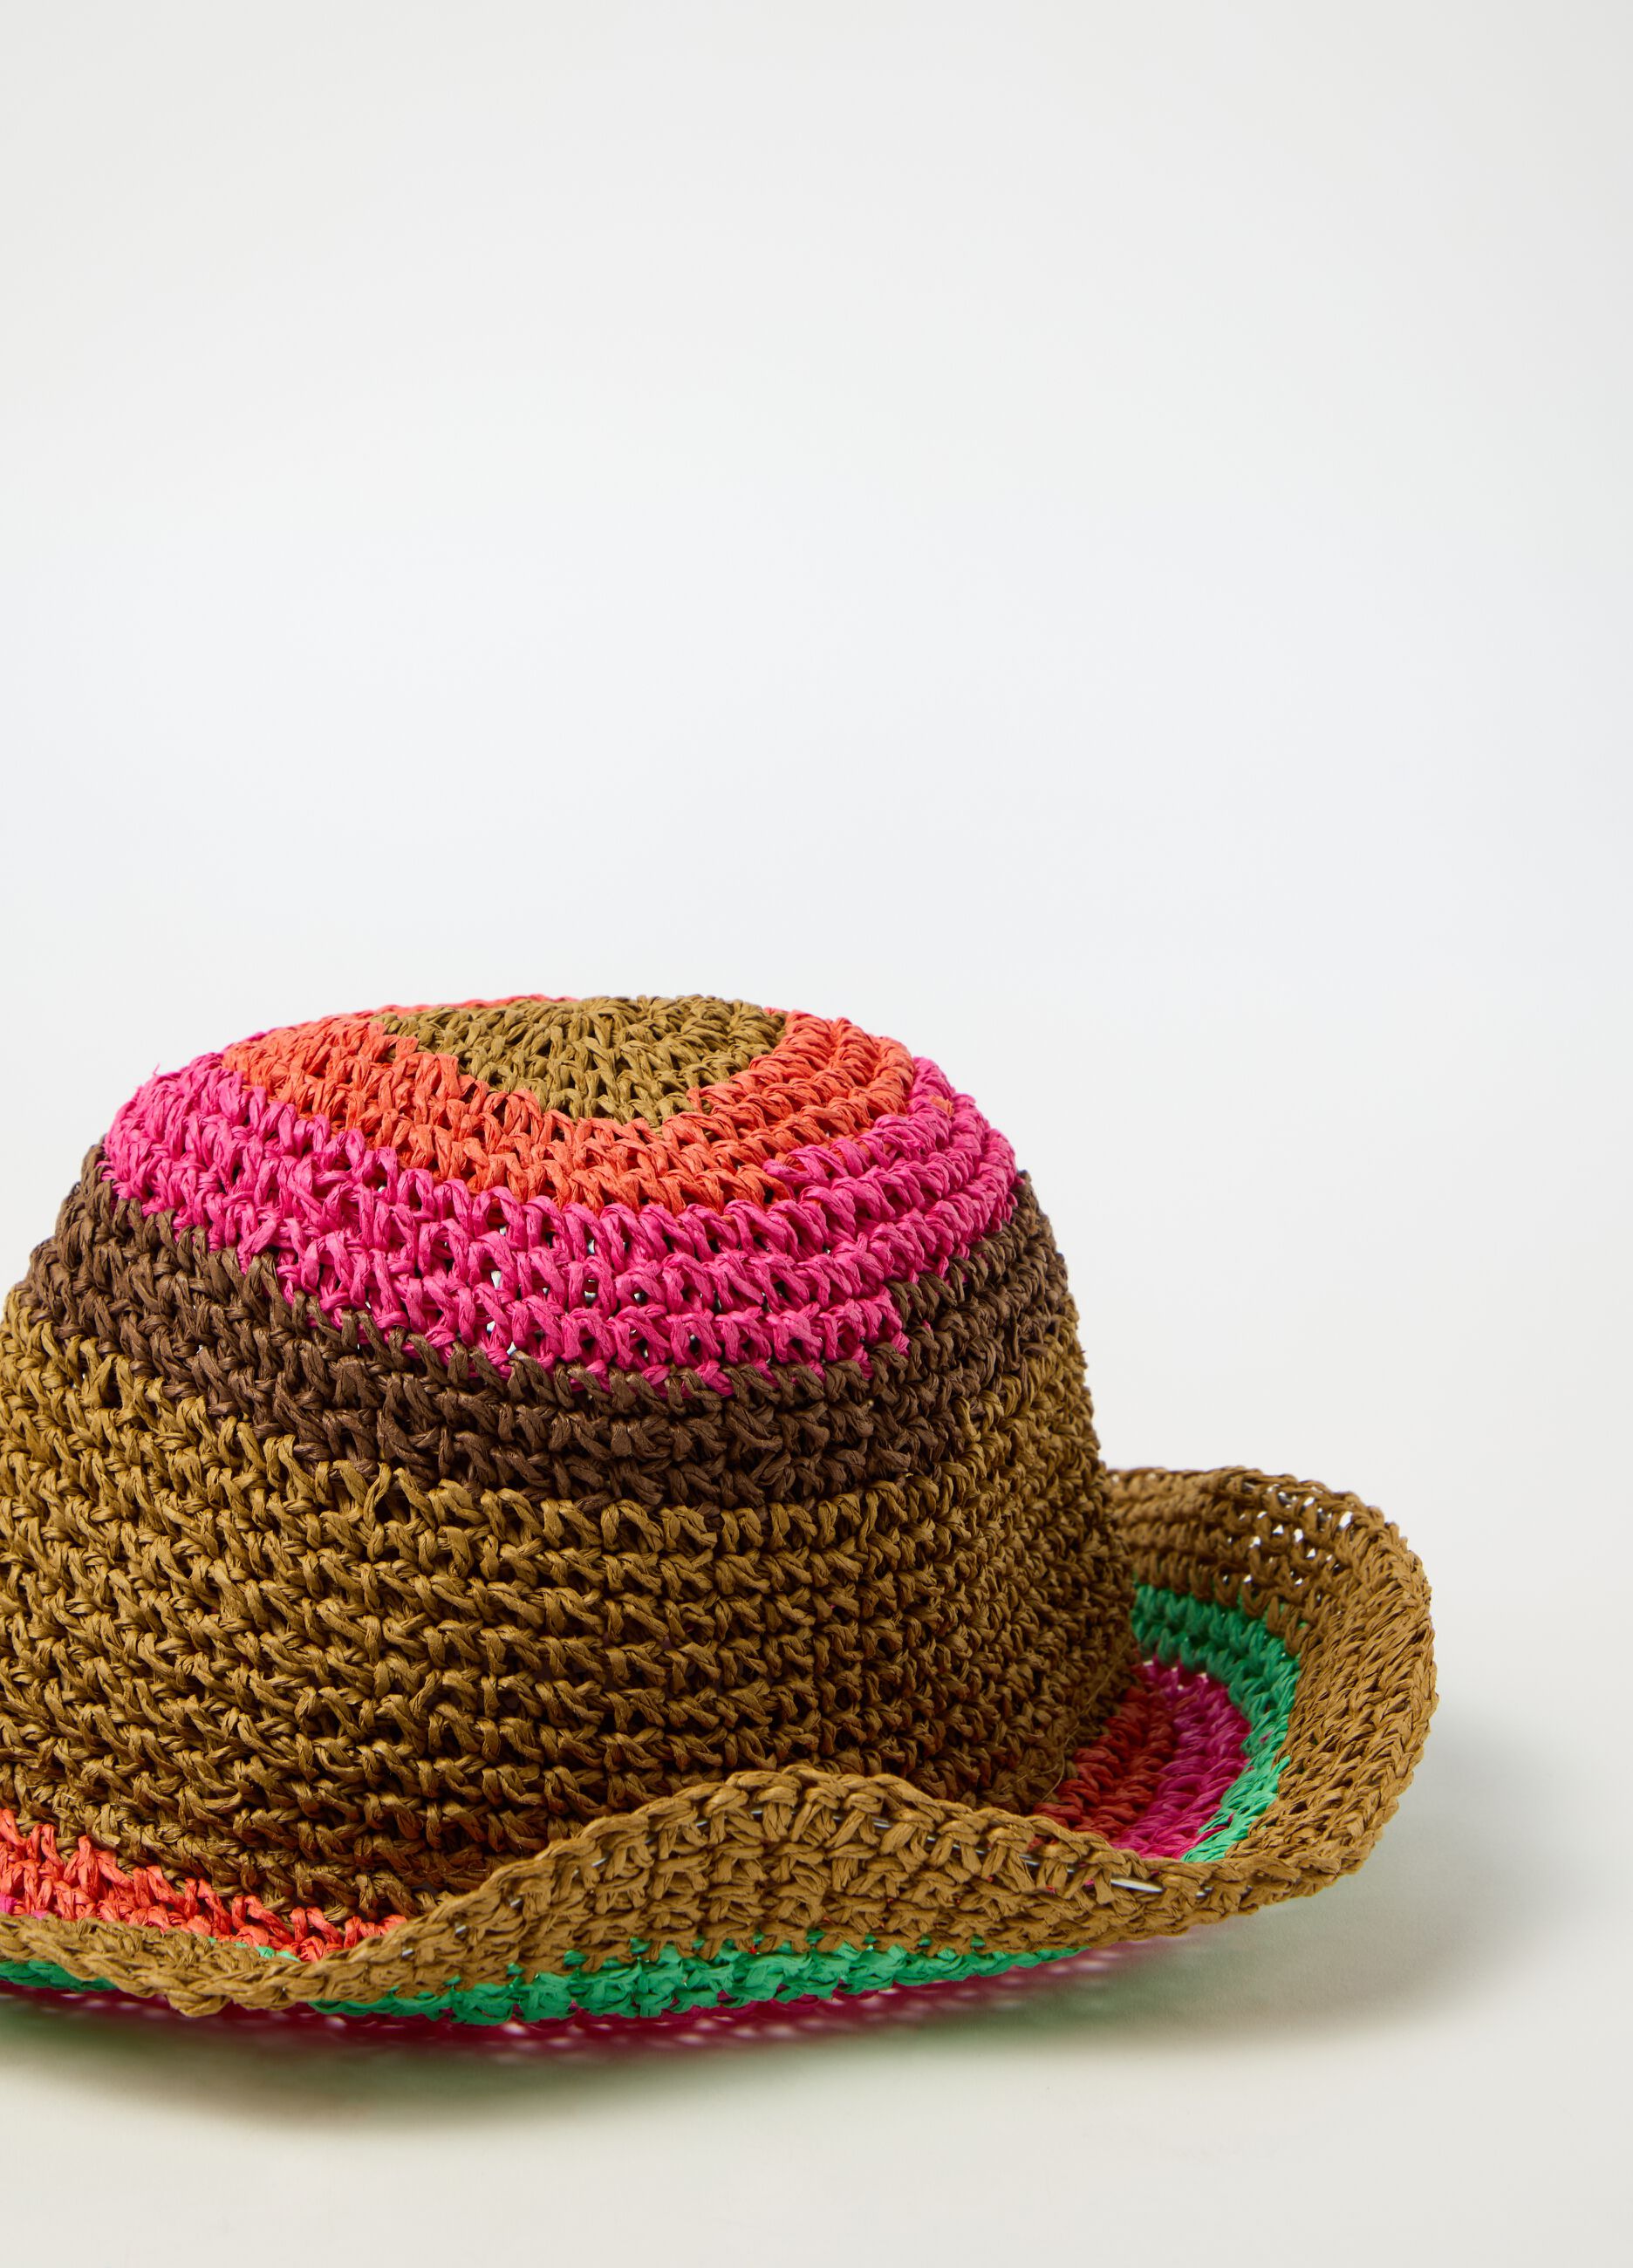 Raffia hat with striped pattern